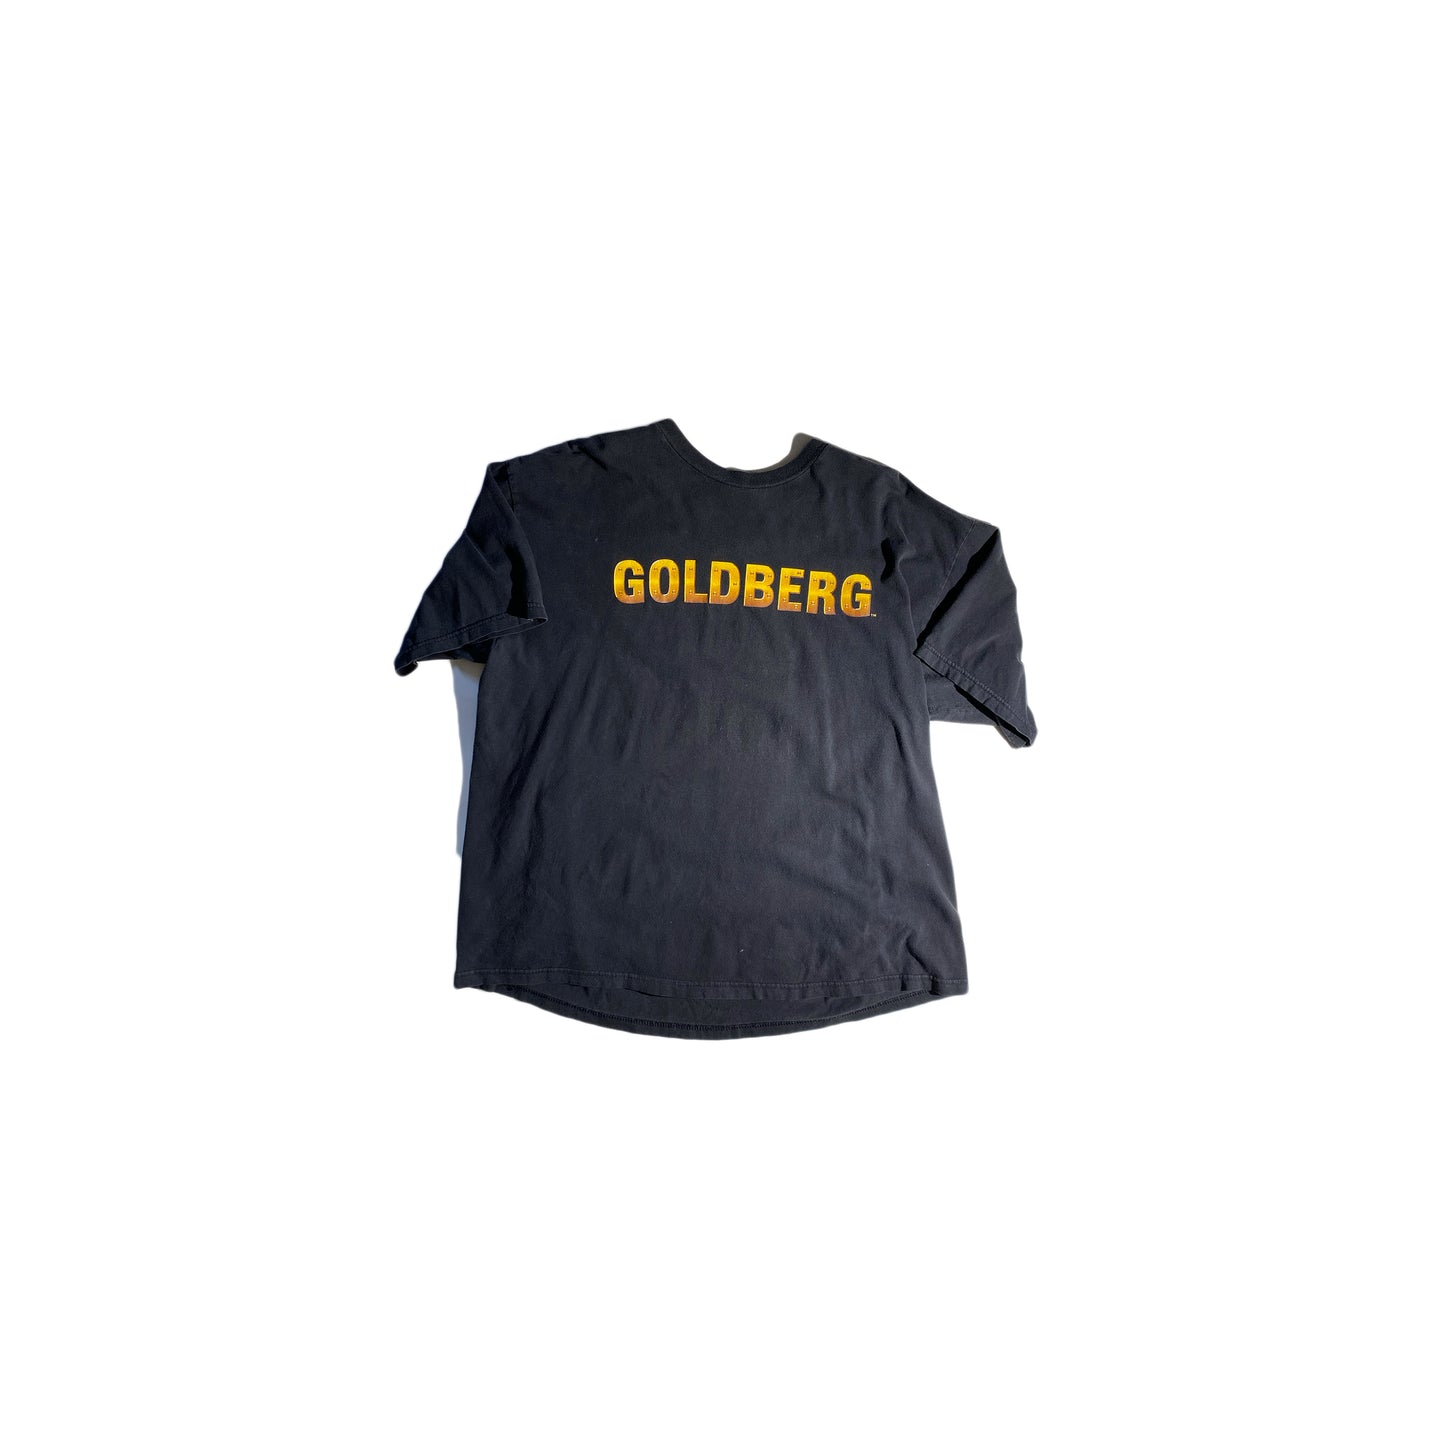 Vintage Goldberg T-Shirt WOW